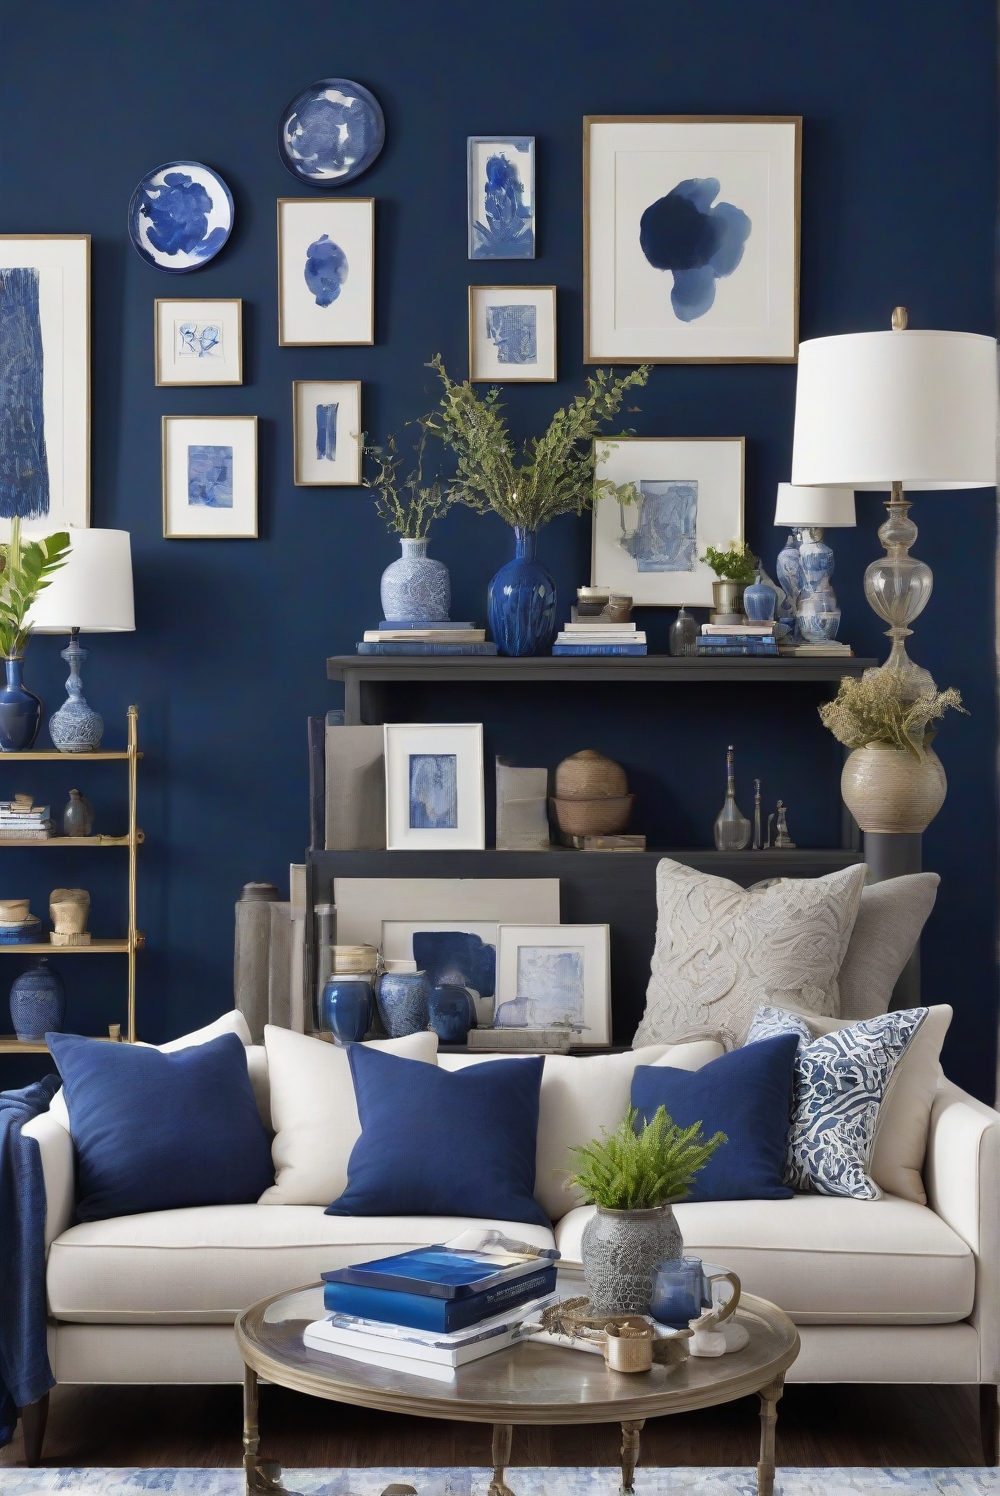 Inky Blue paint, deep blue paint, best interior paint, home decorating ideas, interior design, space planning, kitchen designs, paint color matching